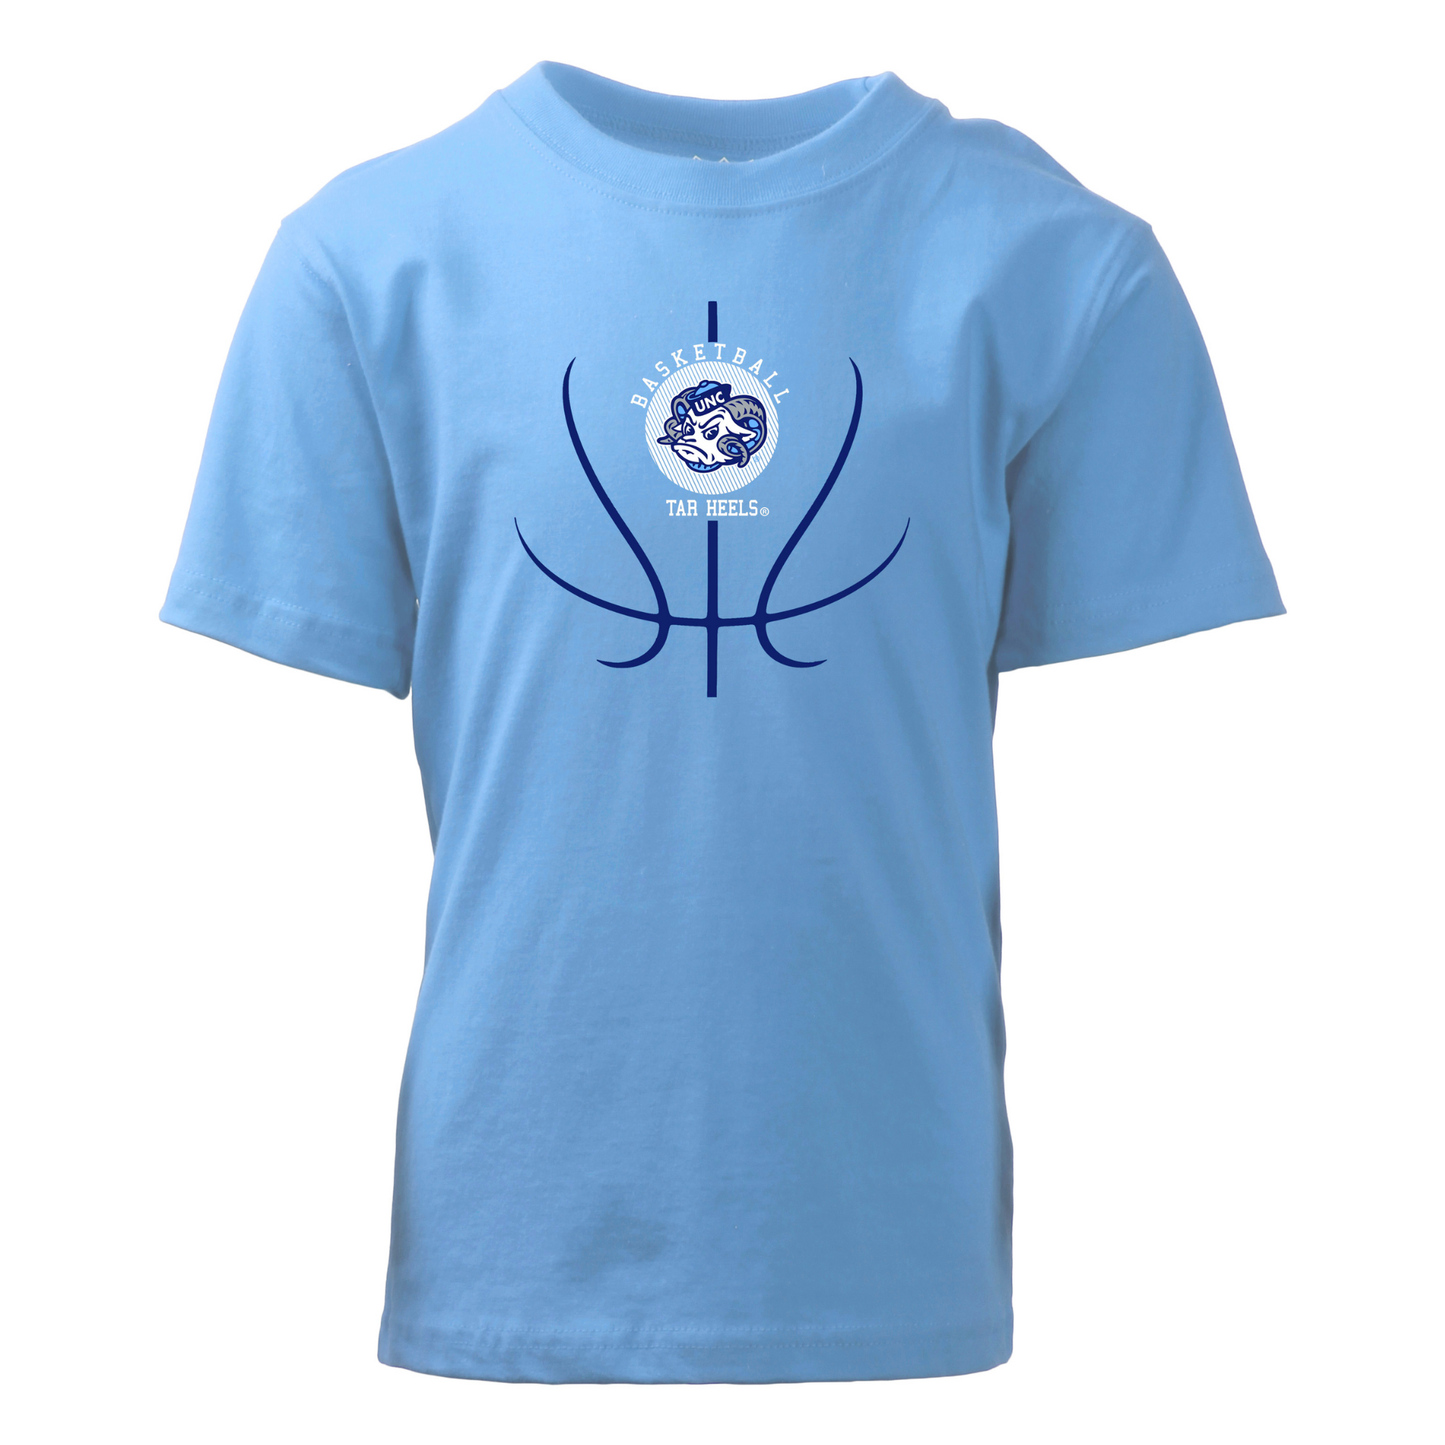 North Carolina Tar Heels Baby T-Shirt with UNC Basketball Logo in Power Blue